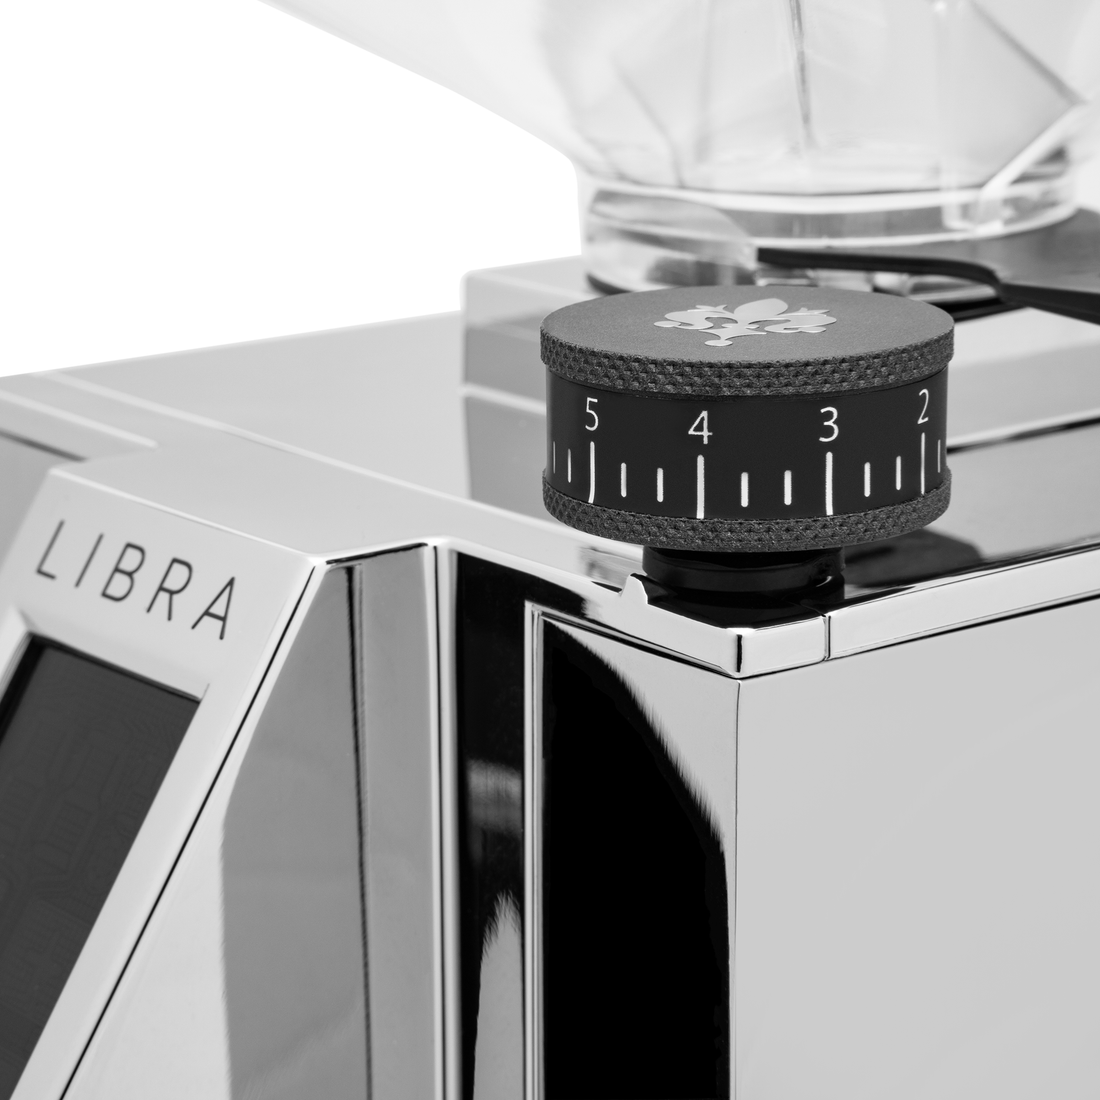 Eureka Mignon Libra Weight Based Espresso Grinder in Chrome